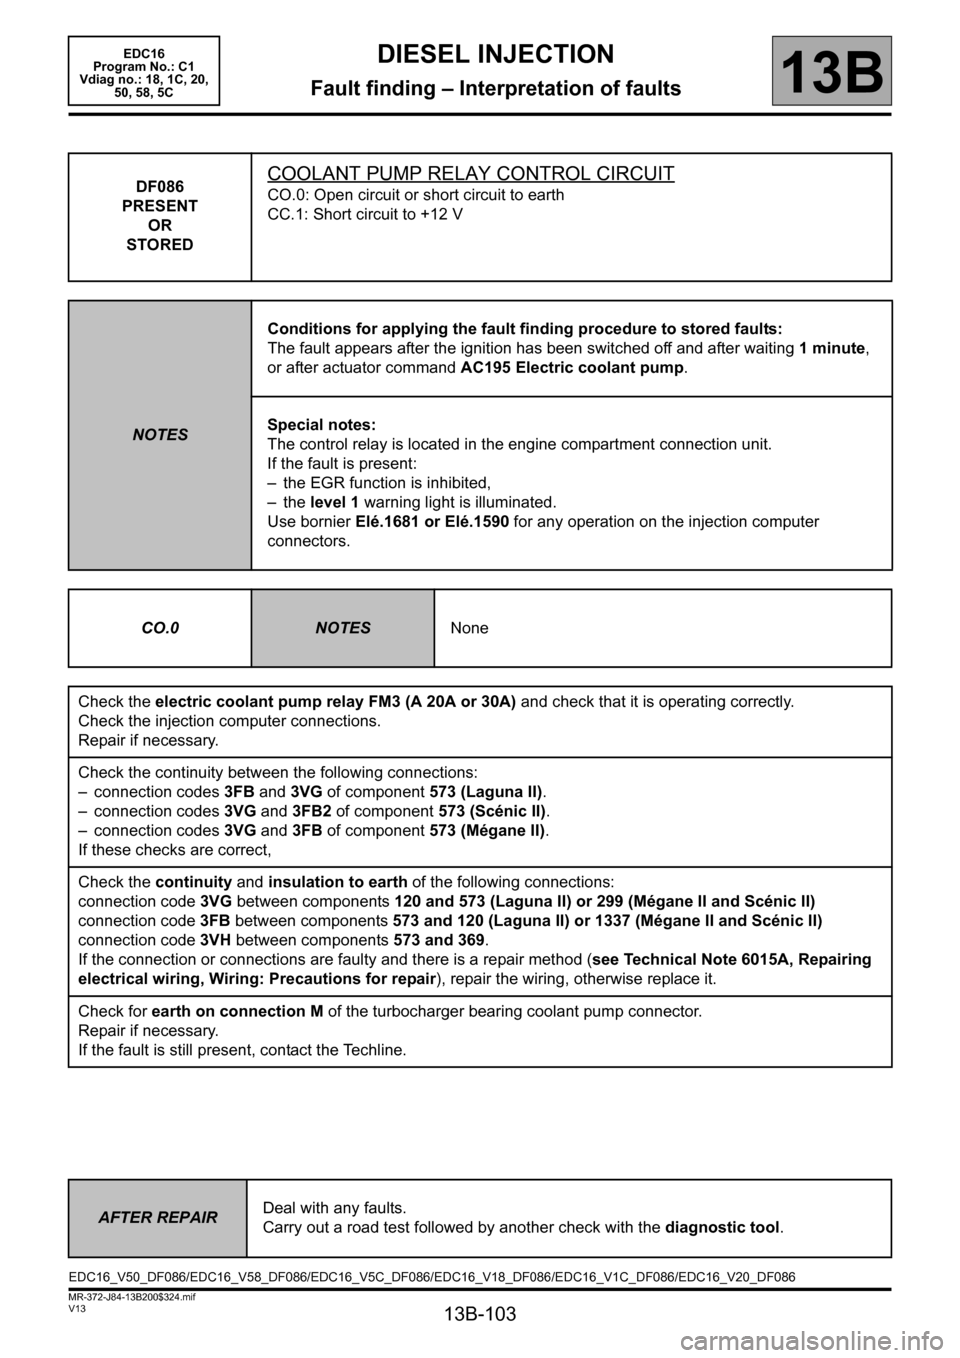 RENAULT SCENIC 2011 J95 / 3.G Engine And Peripherals EDC16 Workshop Manual 13B-103
MR-372-J84-13B200$324.mif
V13
DIESEL INJECTION
Fault finding – Interpretation of faults
EDC16  
Program No.: C1 
Vdiag no.: 18, 1C, 20,  
50, 58, 5C
13B
DF086
PRESENT
OR
STOREDCOOLANT PUMP R